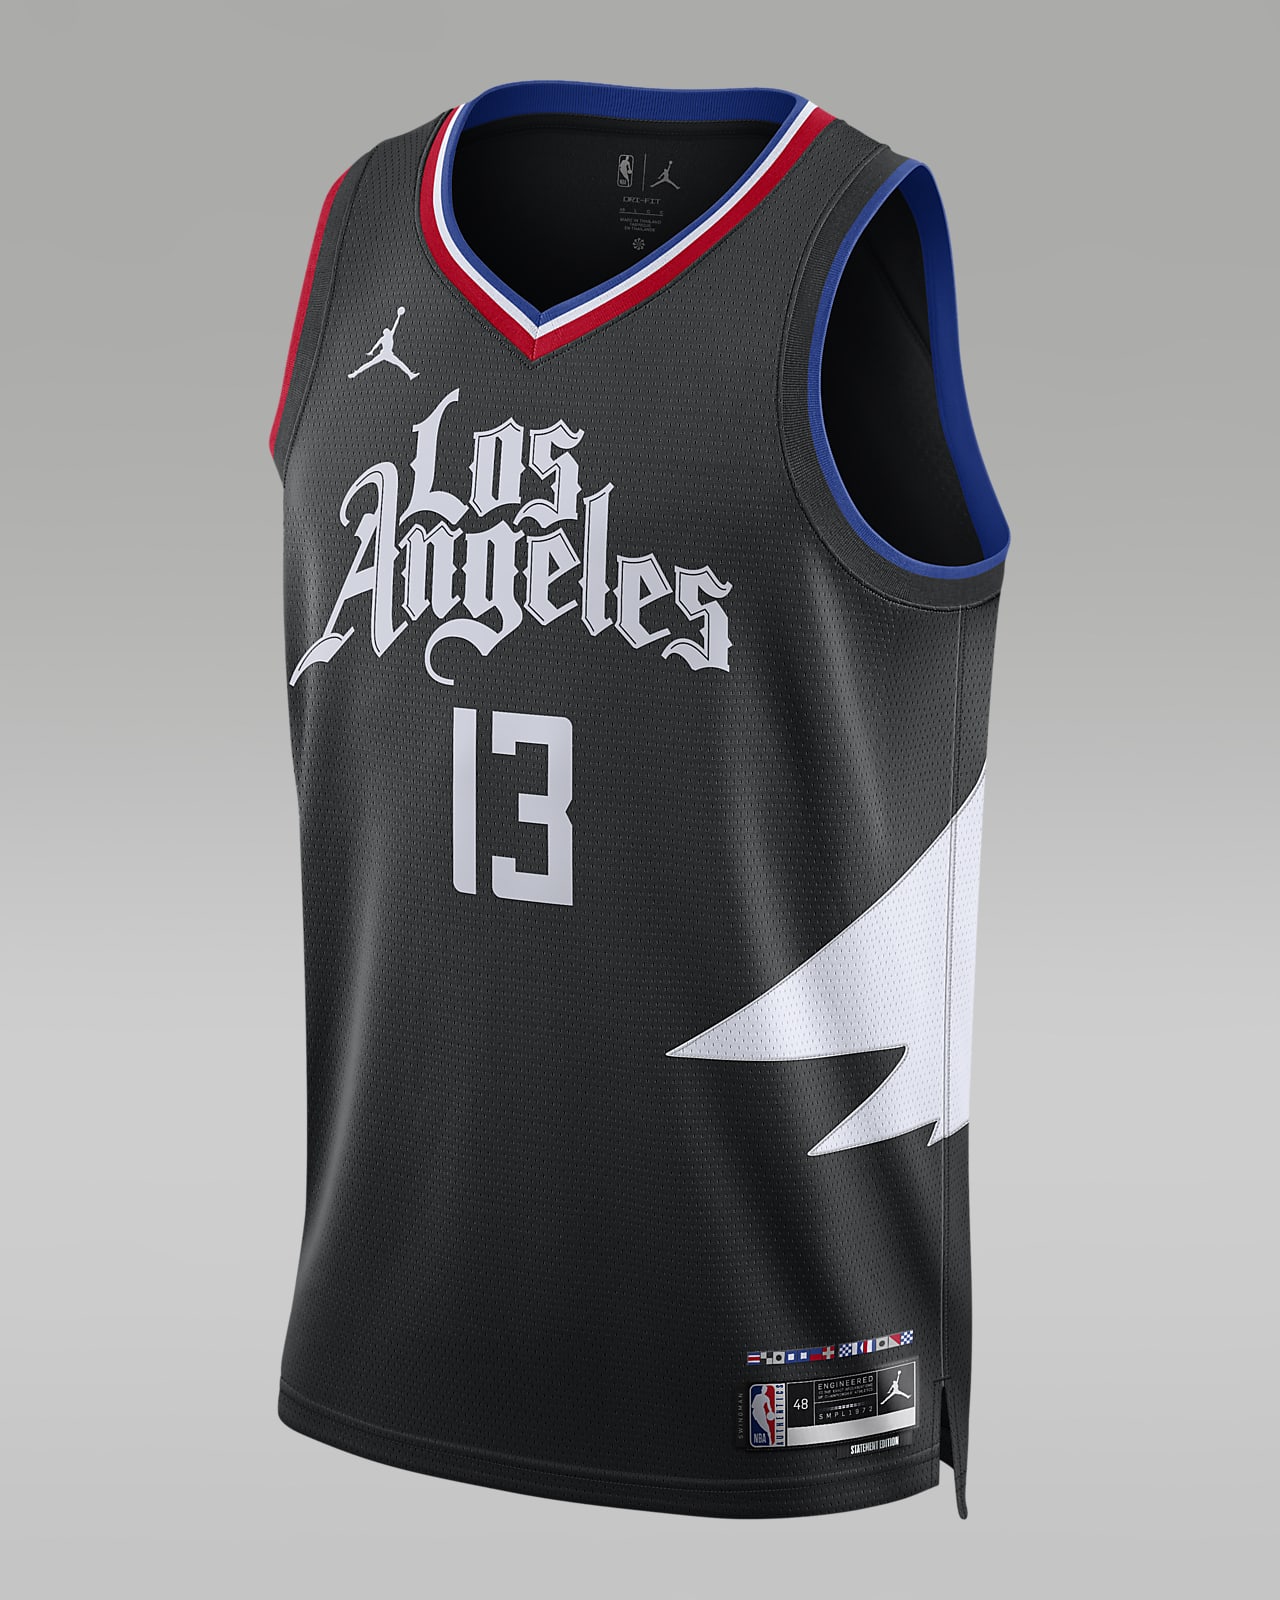 LA Clippers Jerseys, Clippers Basketball Jerseys